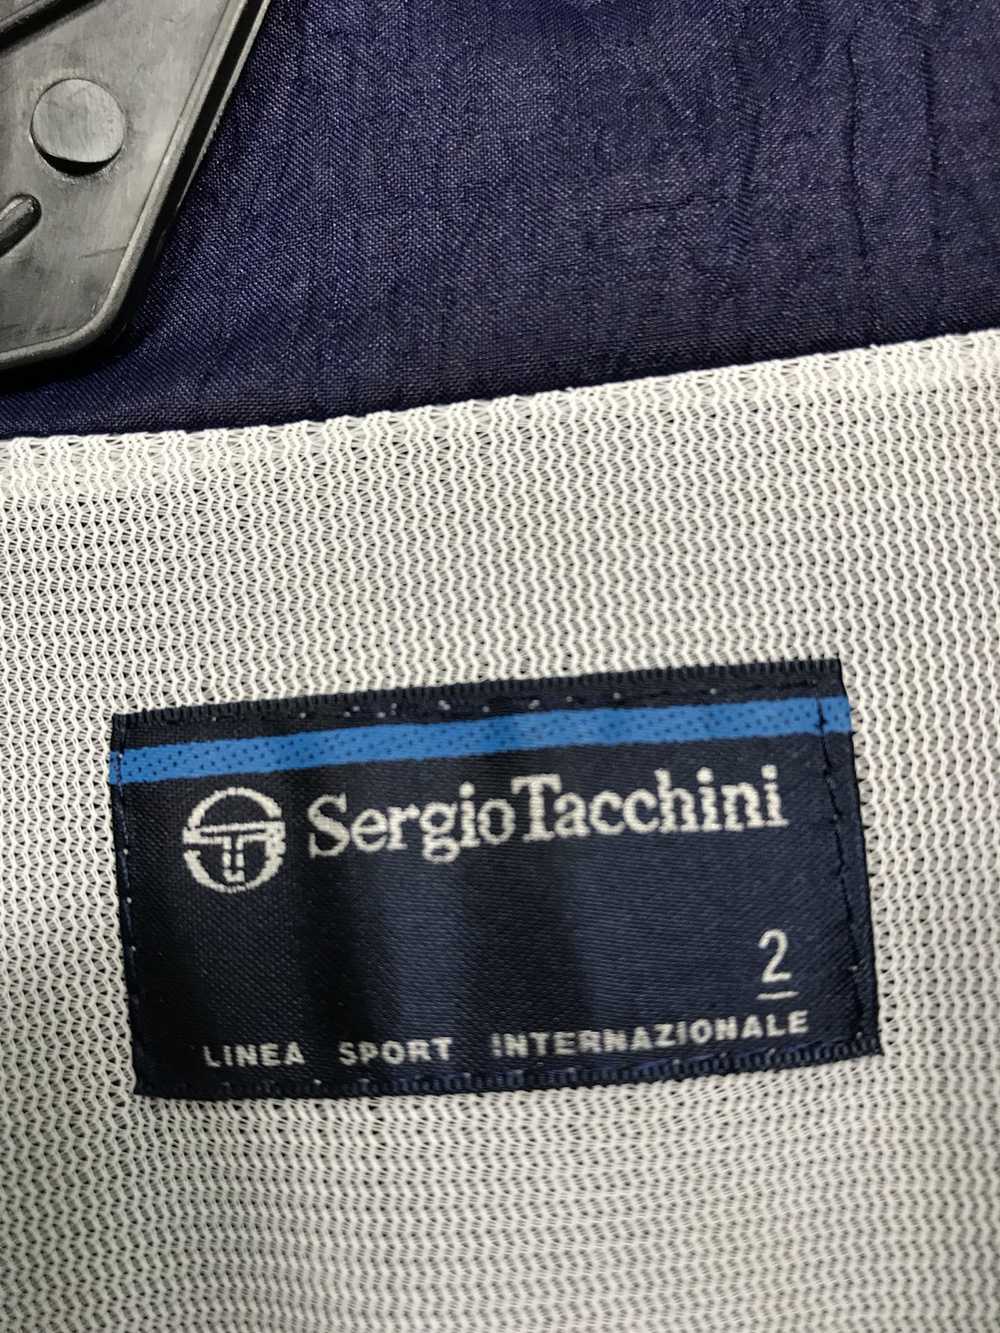 Sergio Tacchini Sergio Tacchini vintage sweater x… - image 5